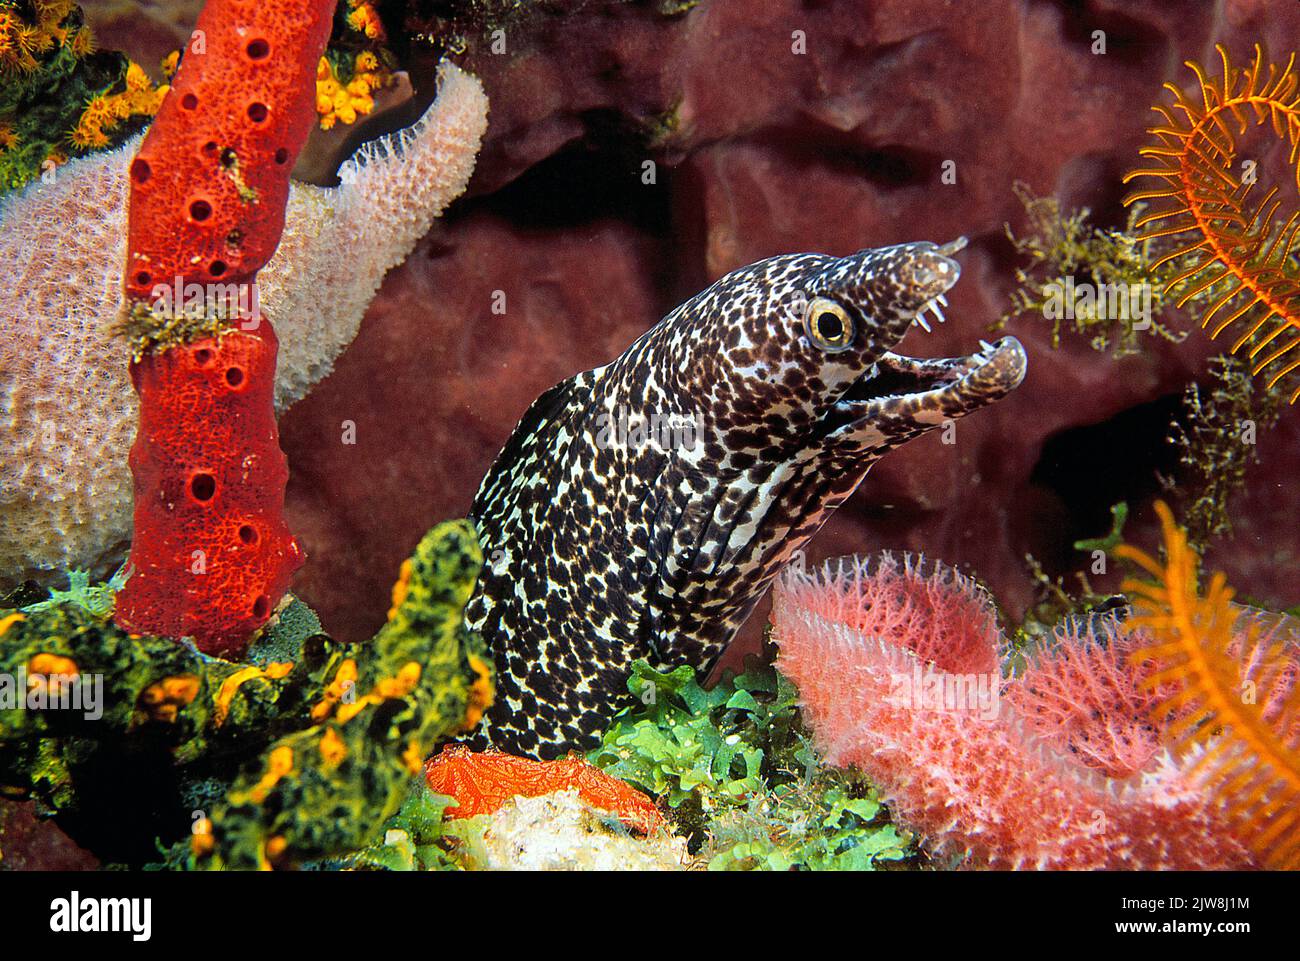 Spotted moray (Gymnothorax moringa) in a caribbean coral reef, Statia, St. Eustatius, Caribbean Stock Photo